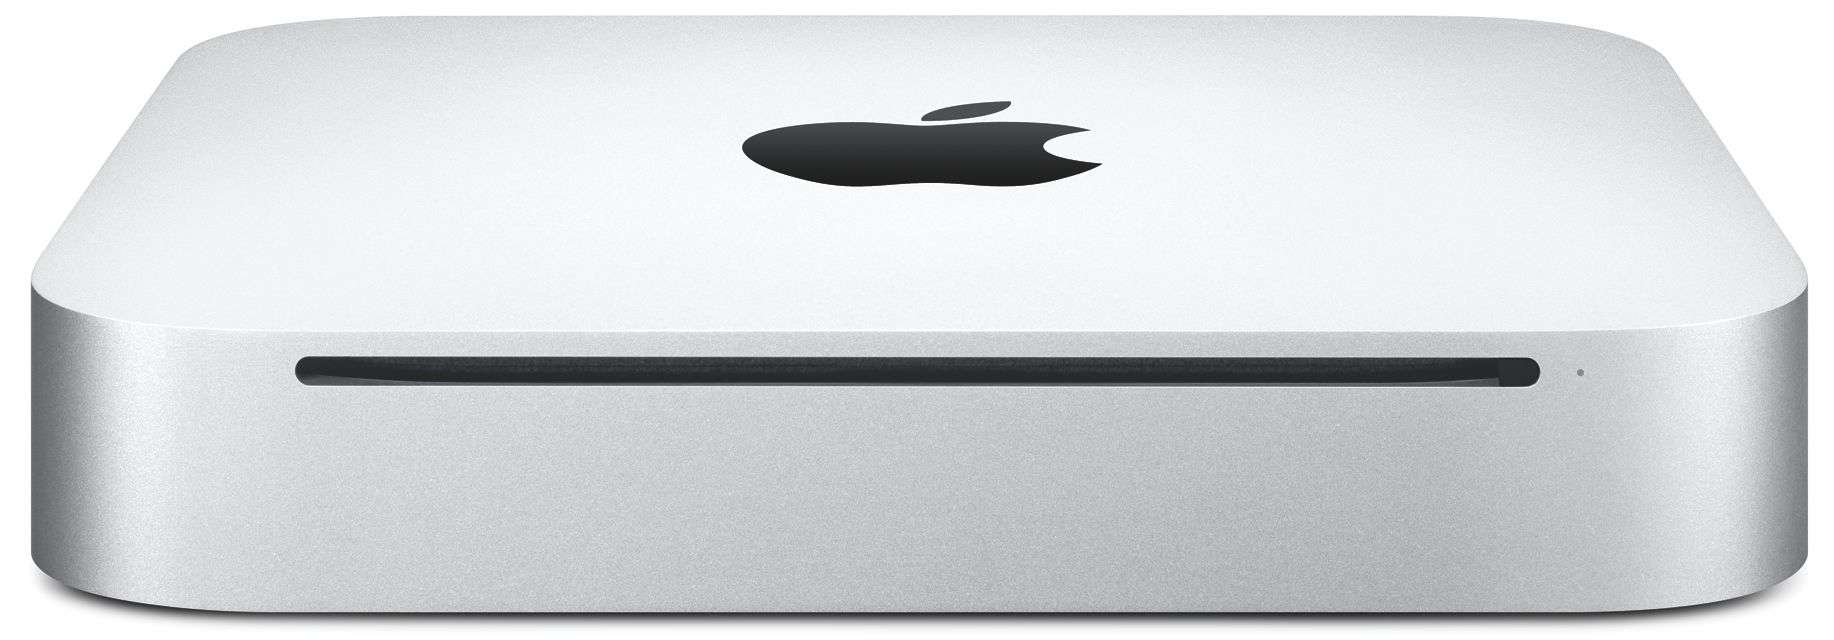 Today in Apple history: Aluminum Mac mini arrives